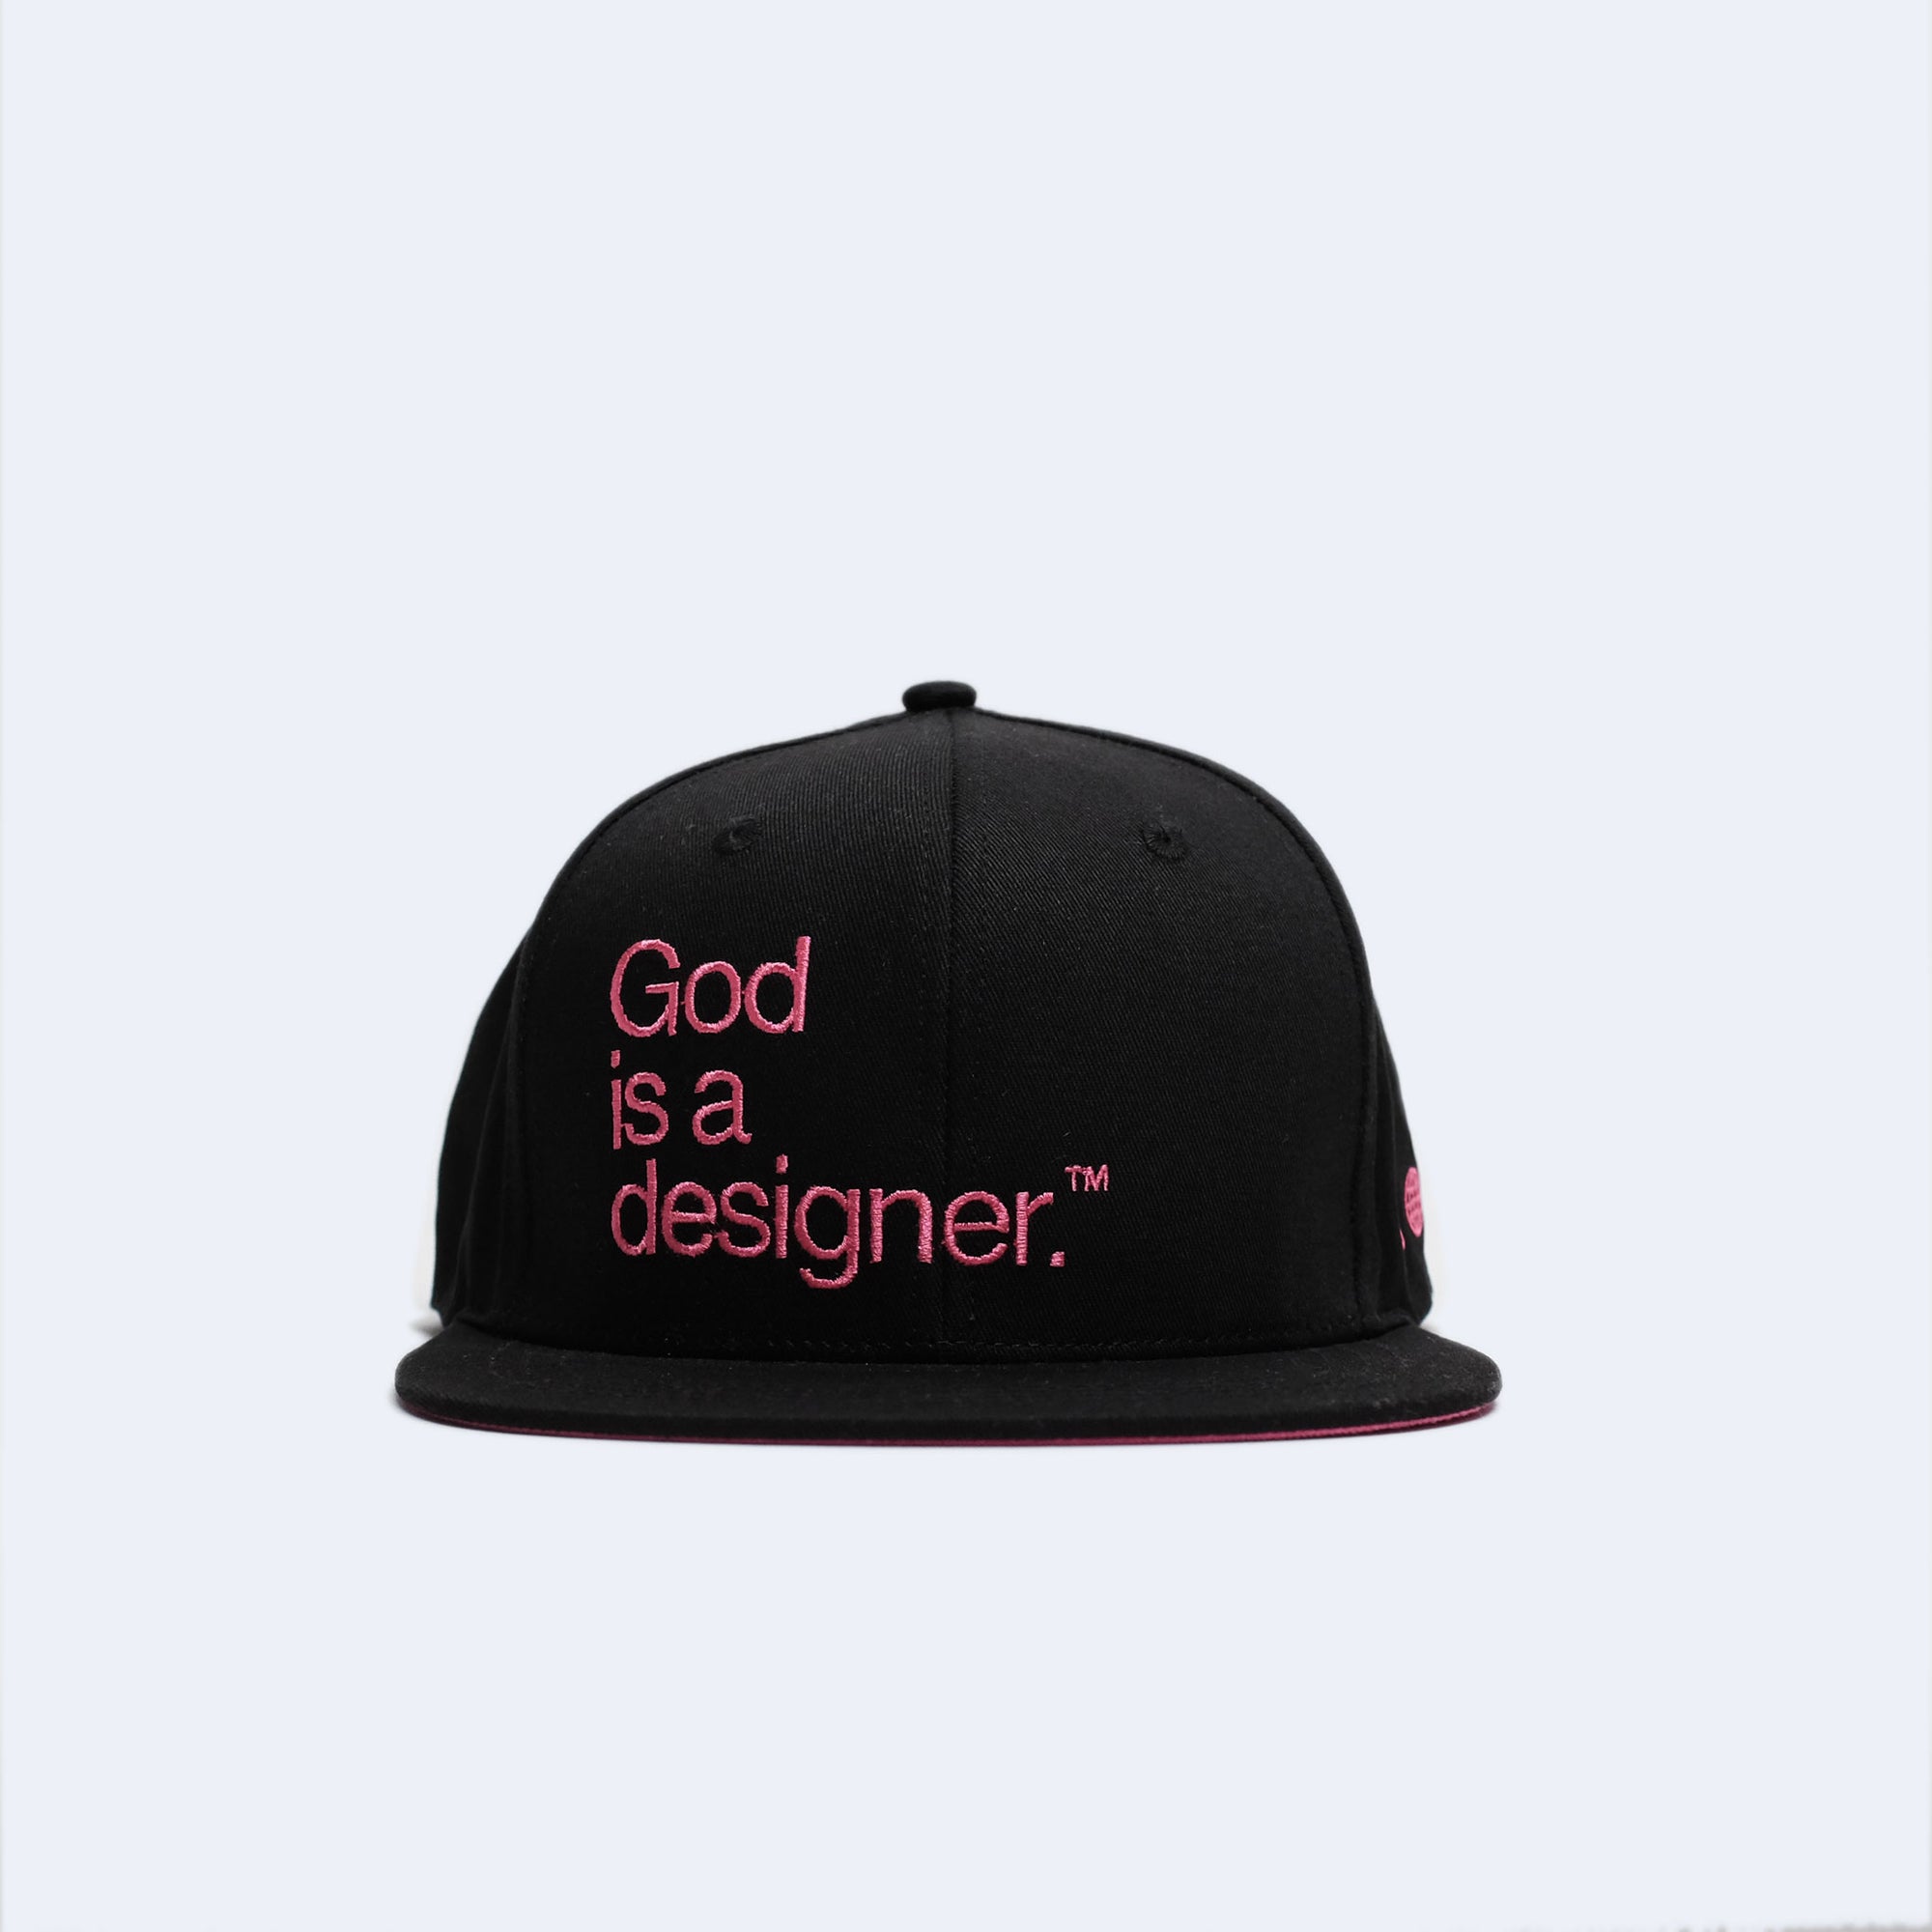 GIAD™ Nebula 6-panel Snapback - God is a designer.®